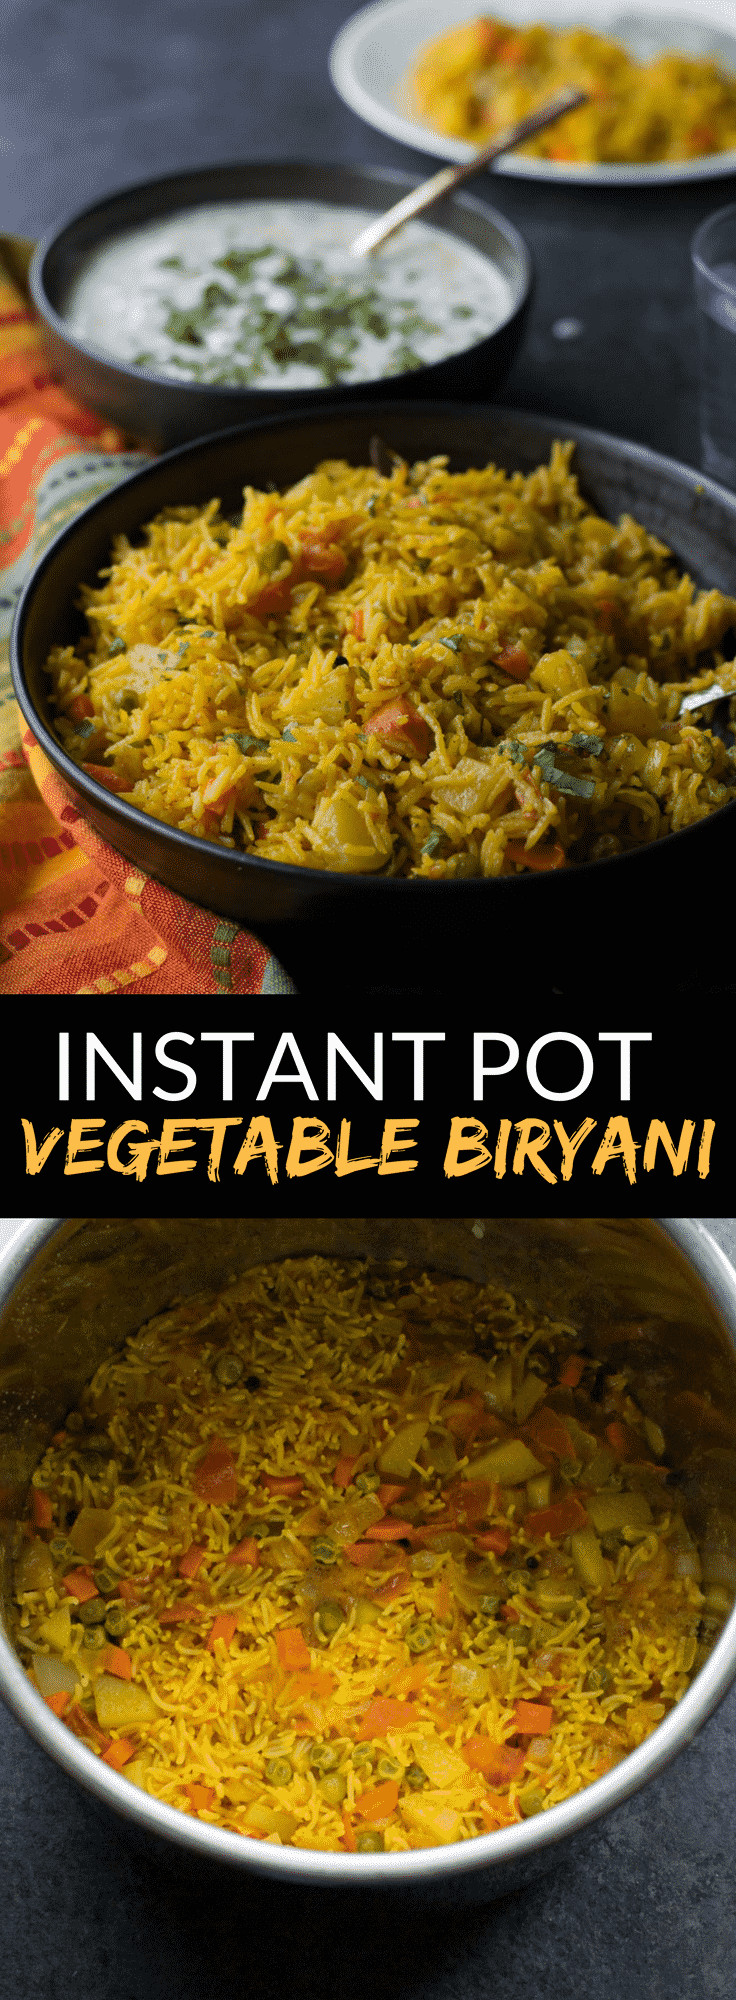 Instant Pot Vegetarian Indian Recipes
 Instant Pot Ve able biryani recipe How to make veg